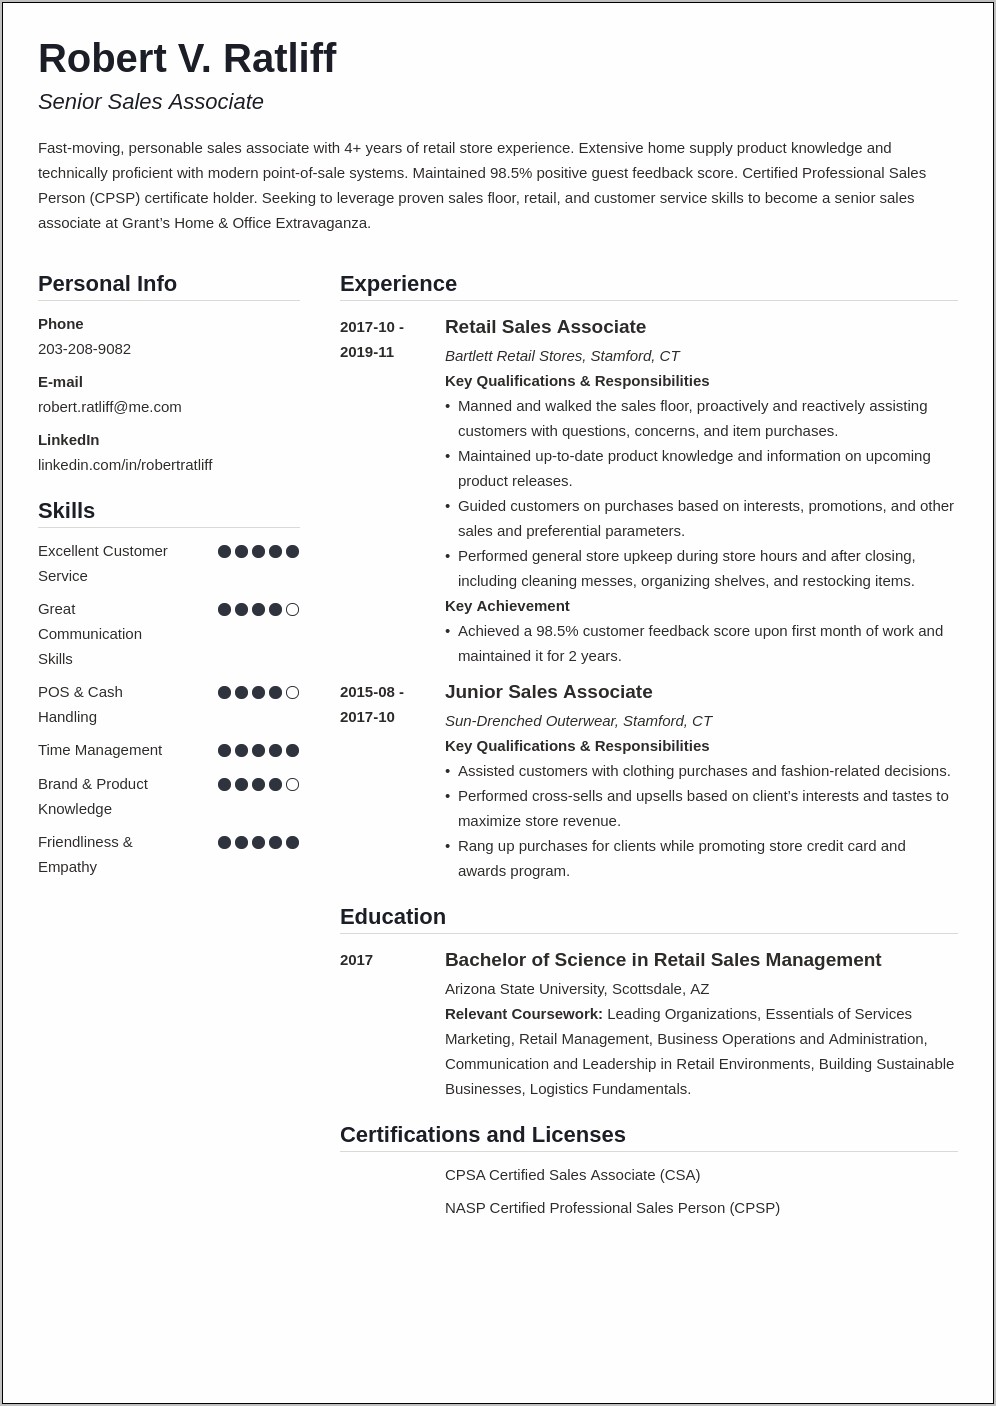 Resume Job Description For Retail Associate